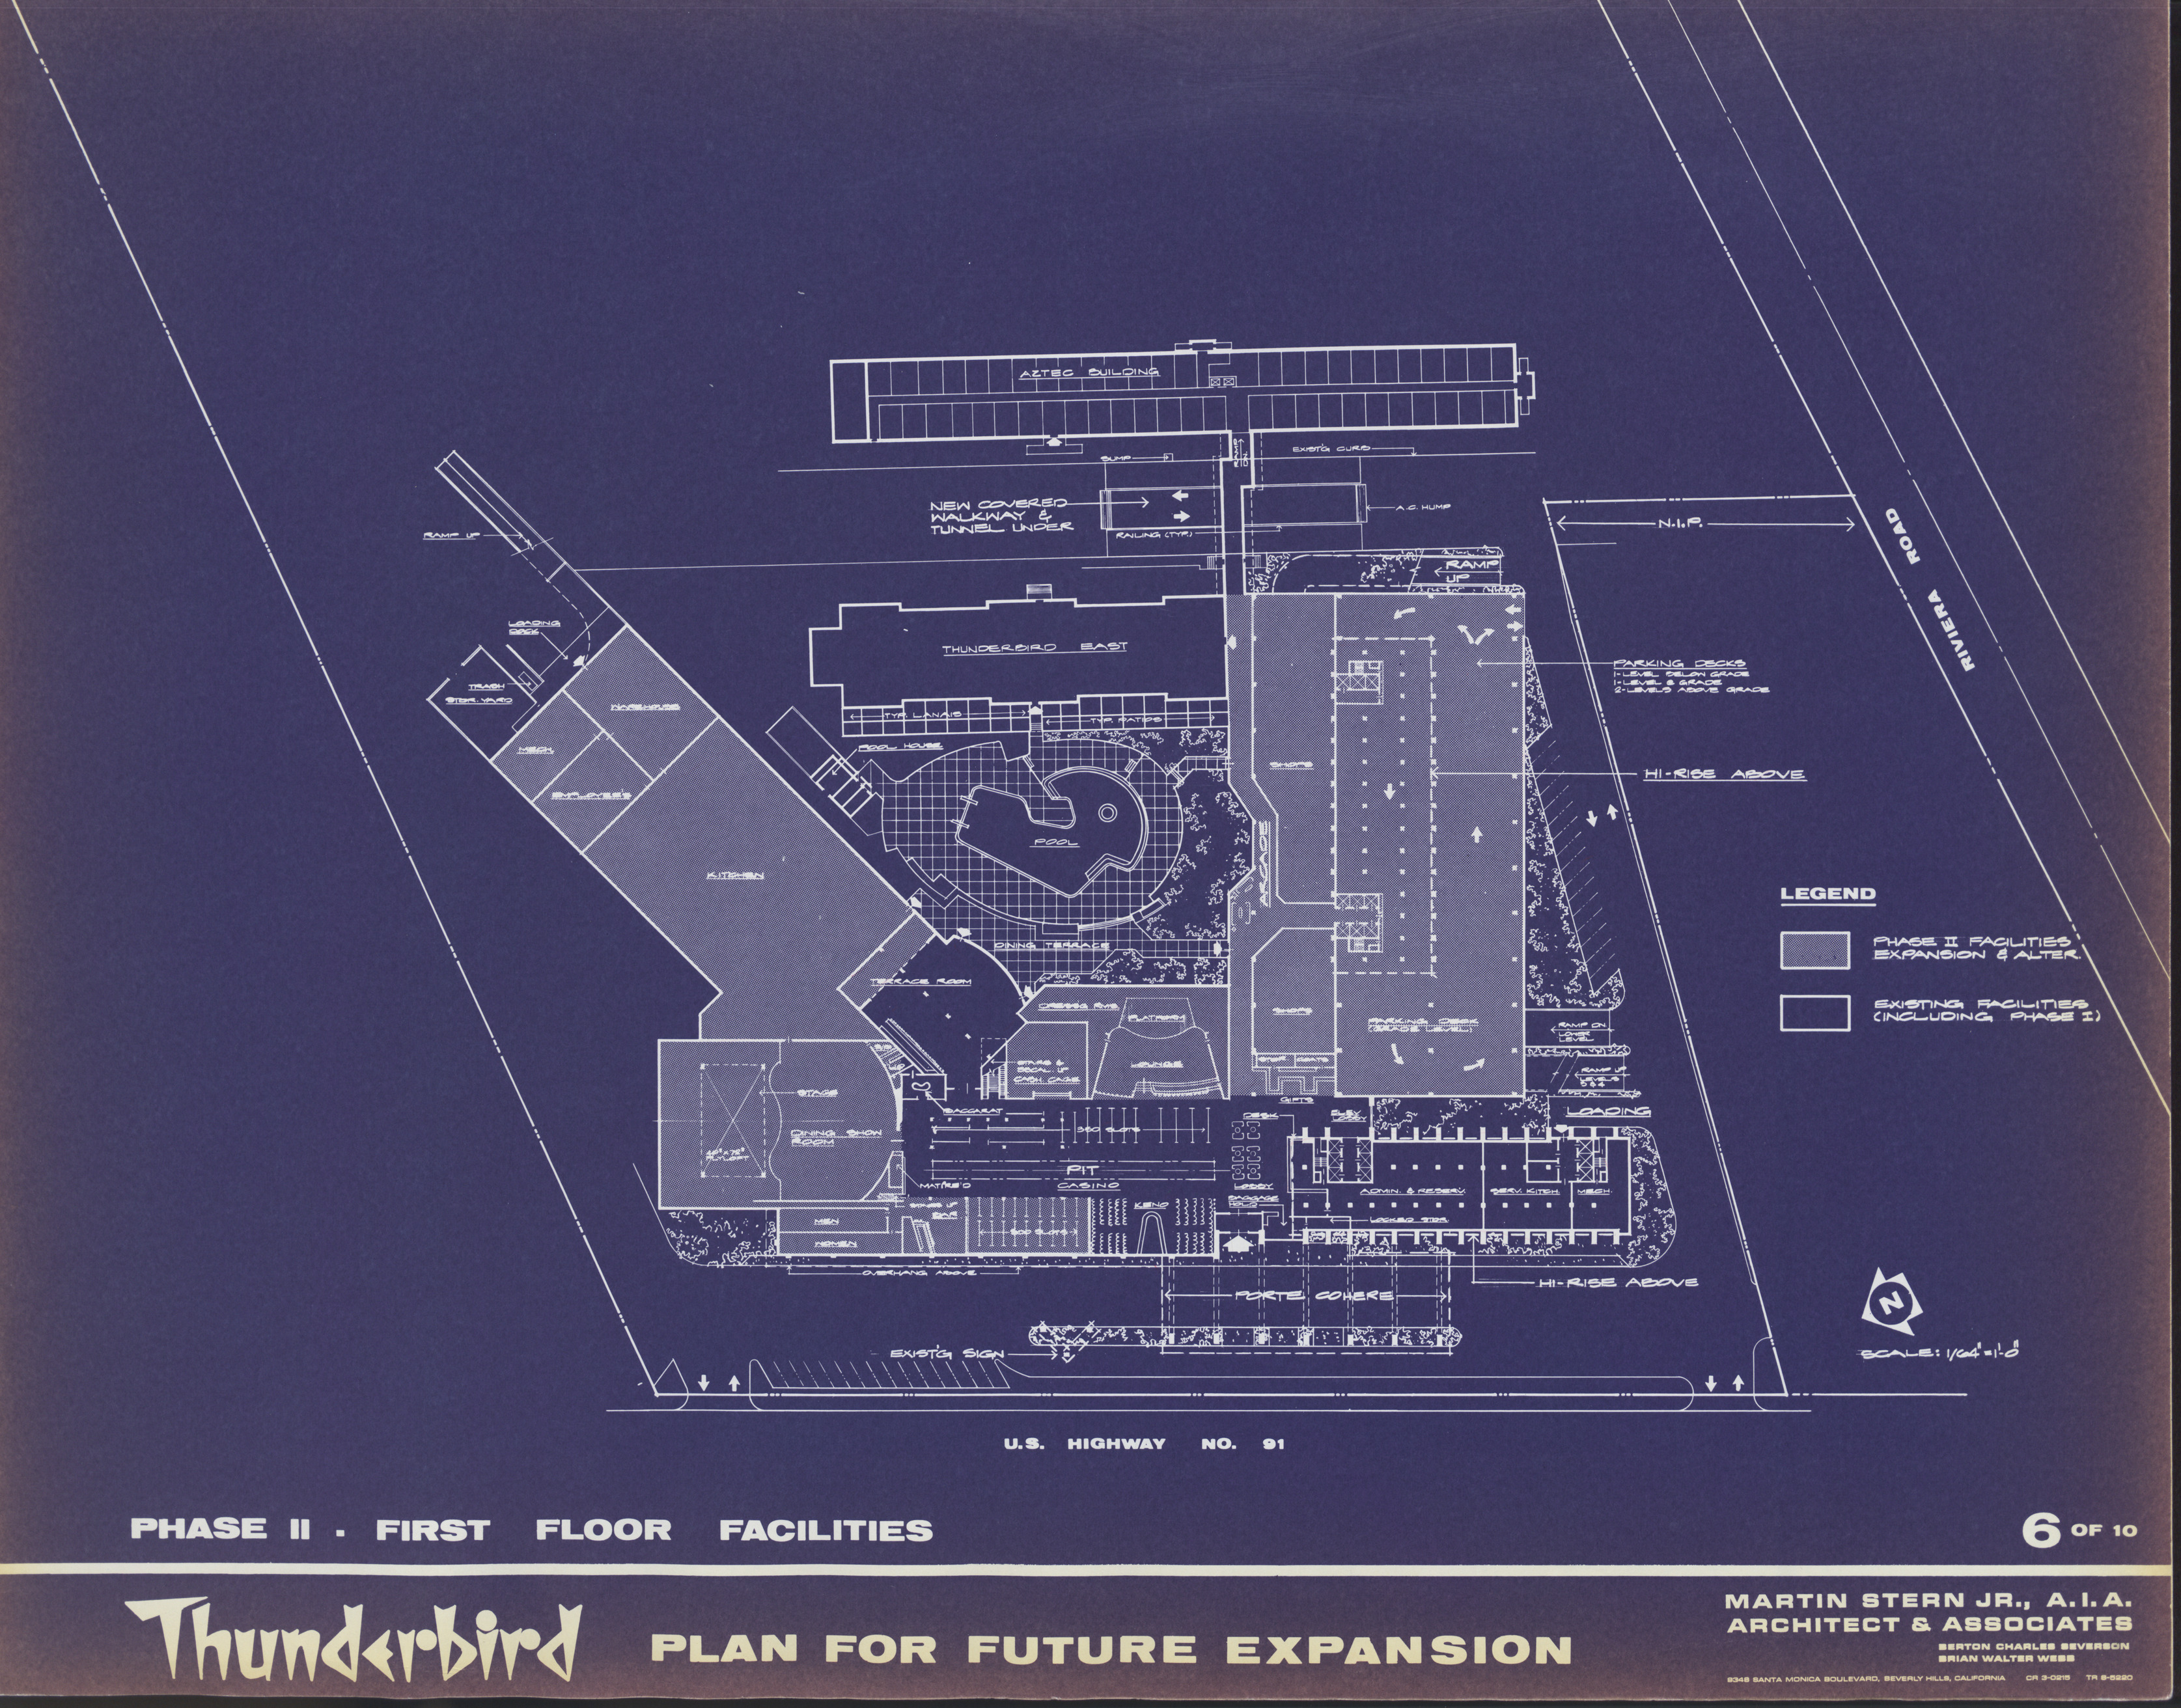 Thunderbird Plan for Future Expansion Proposal, image 6